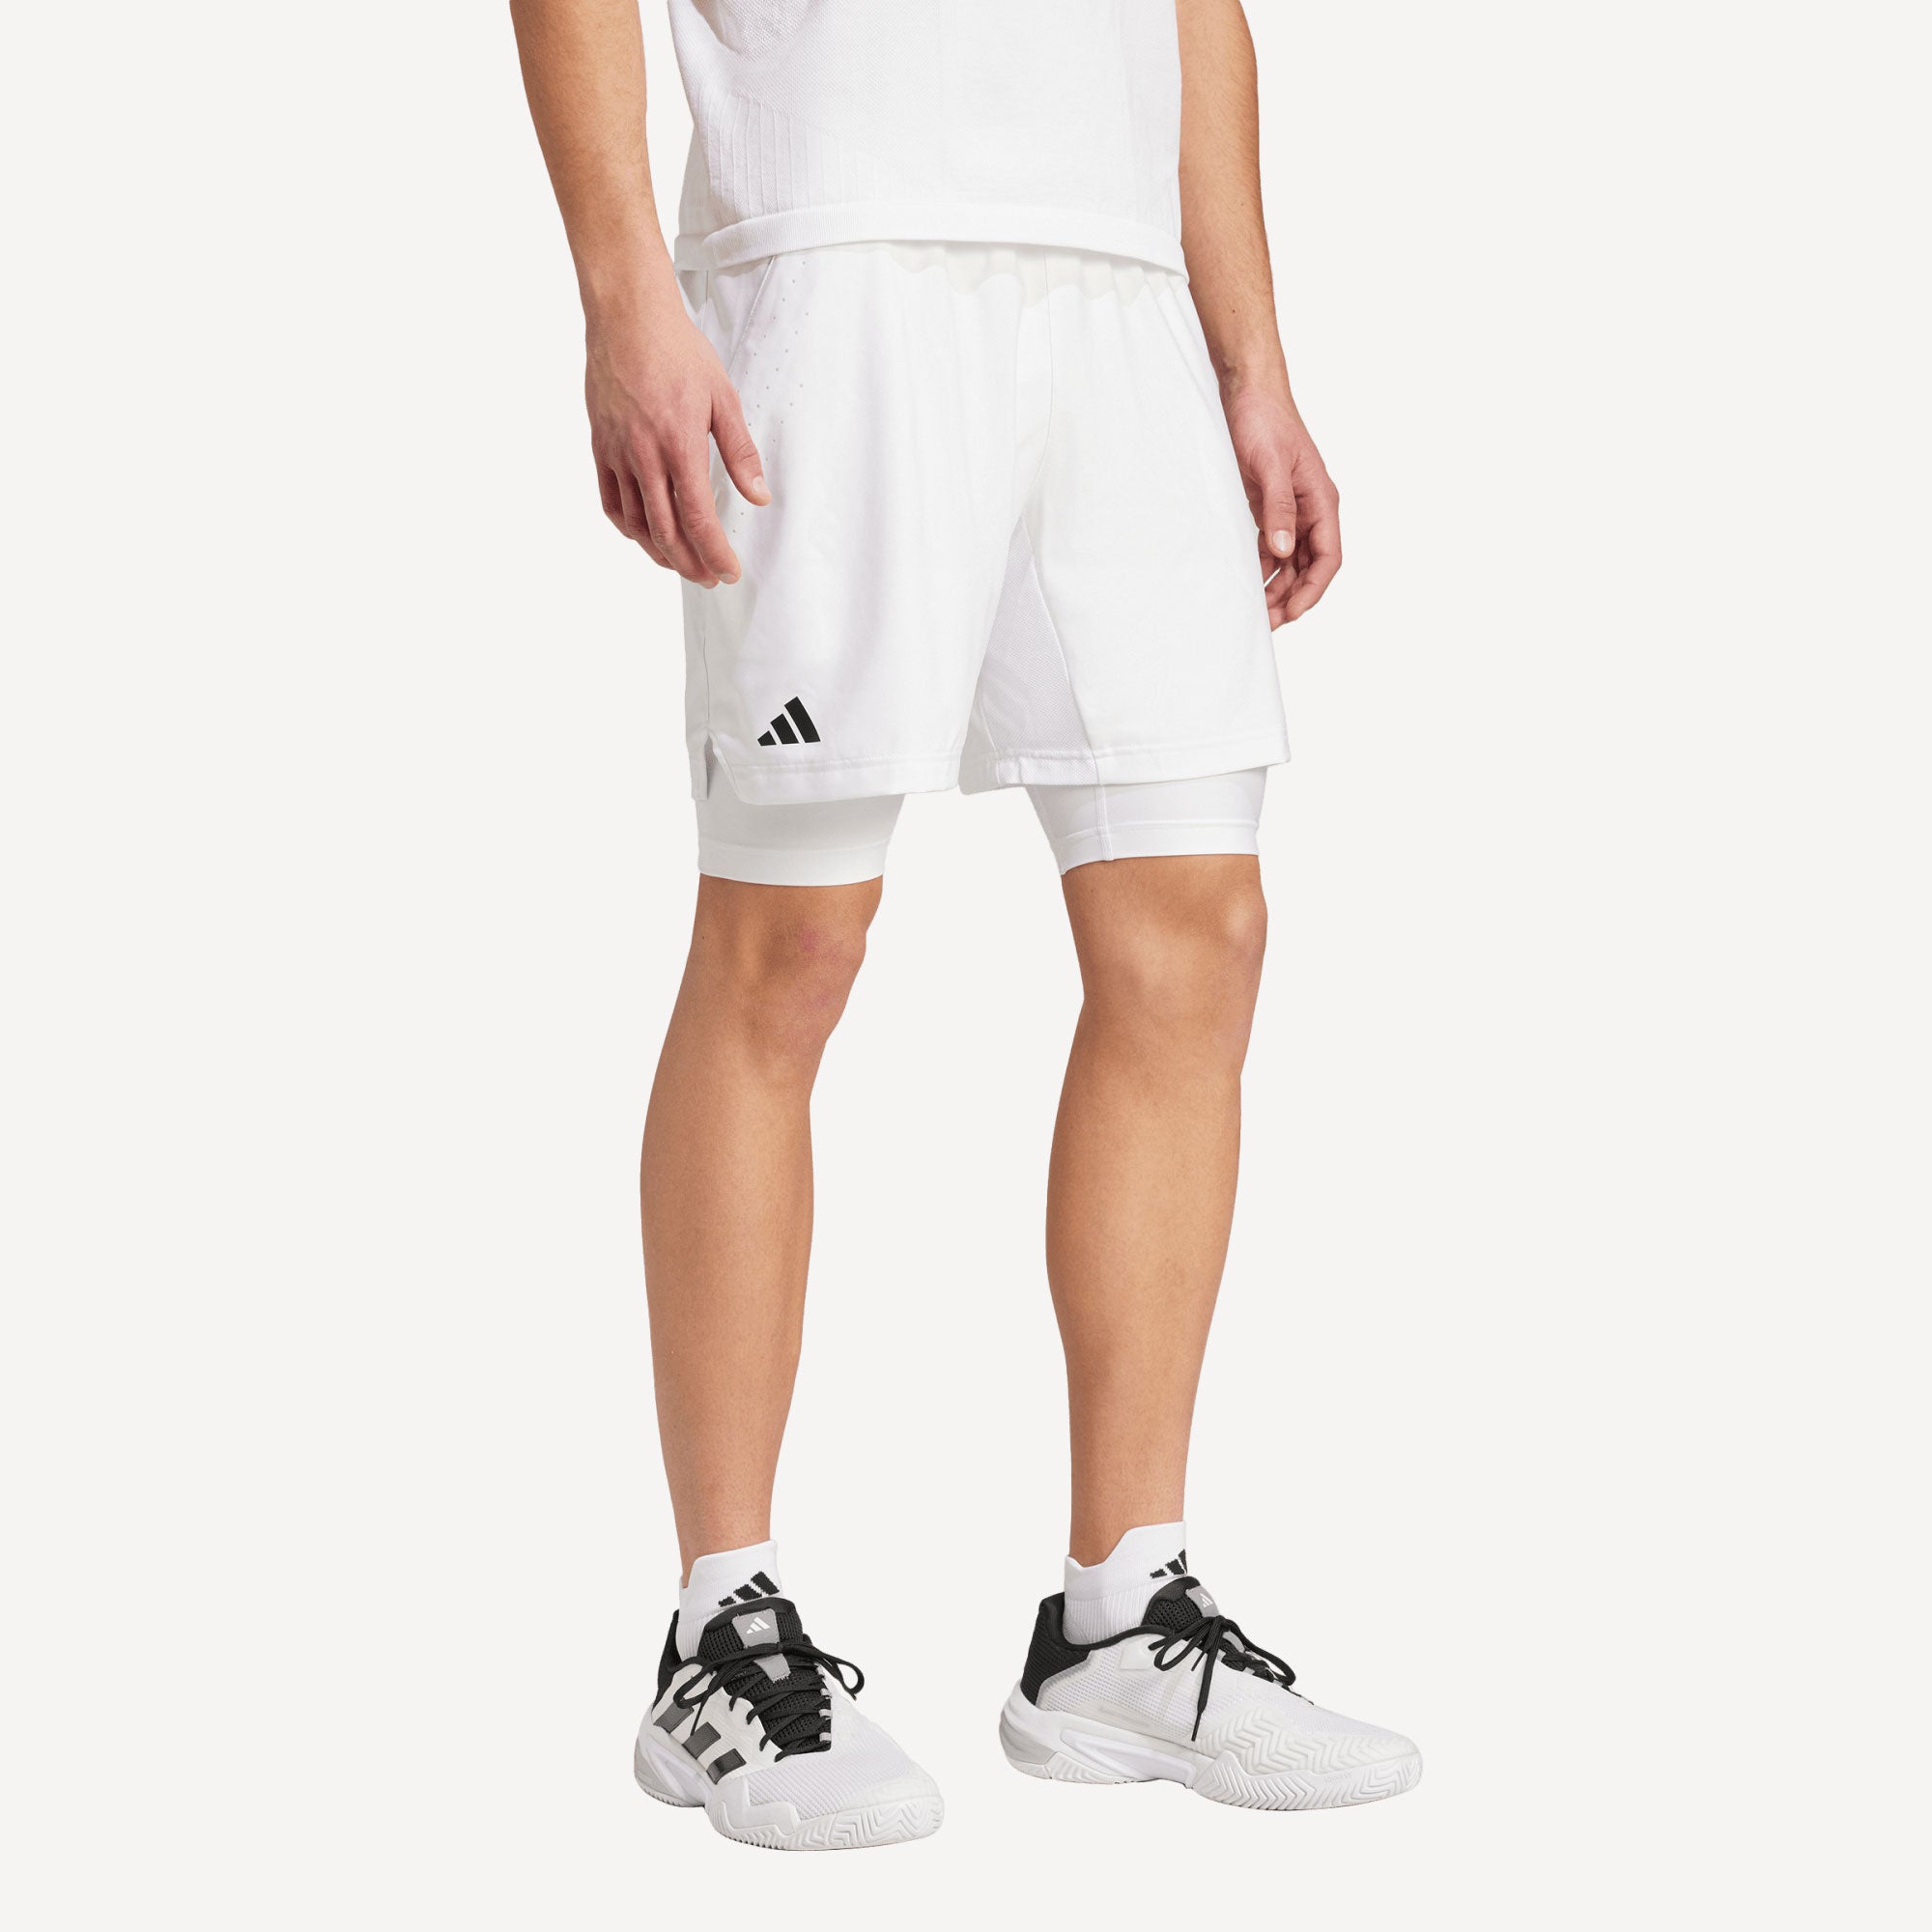 adidas Pro London Men's Tennis Shorts and Inner Shorts Set - White (1)